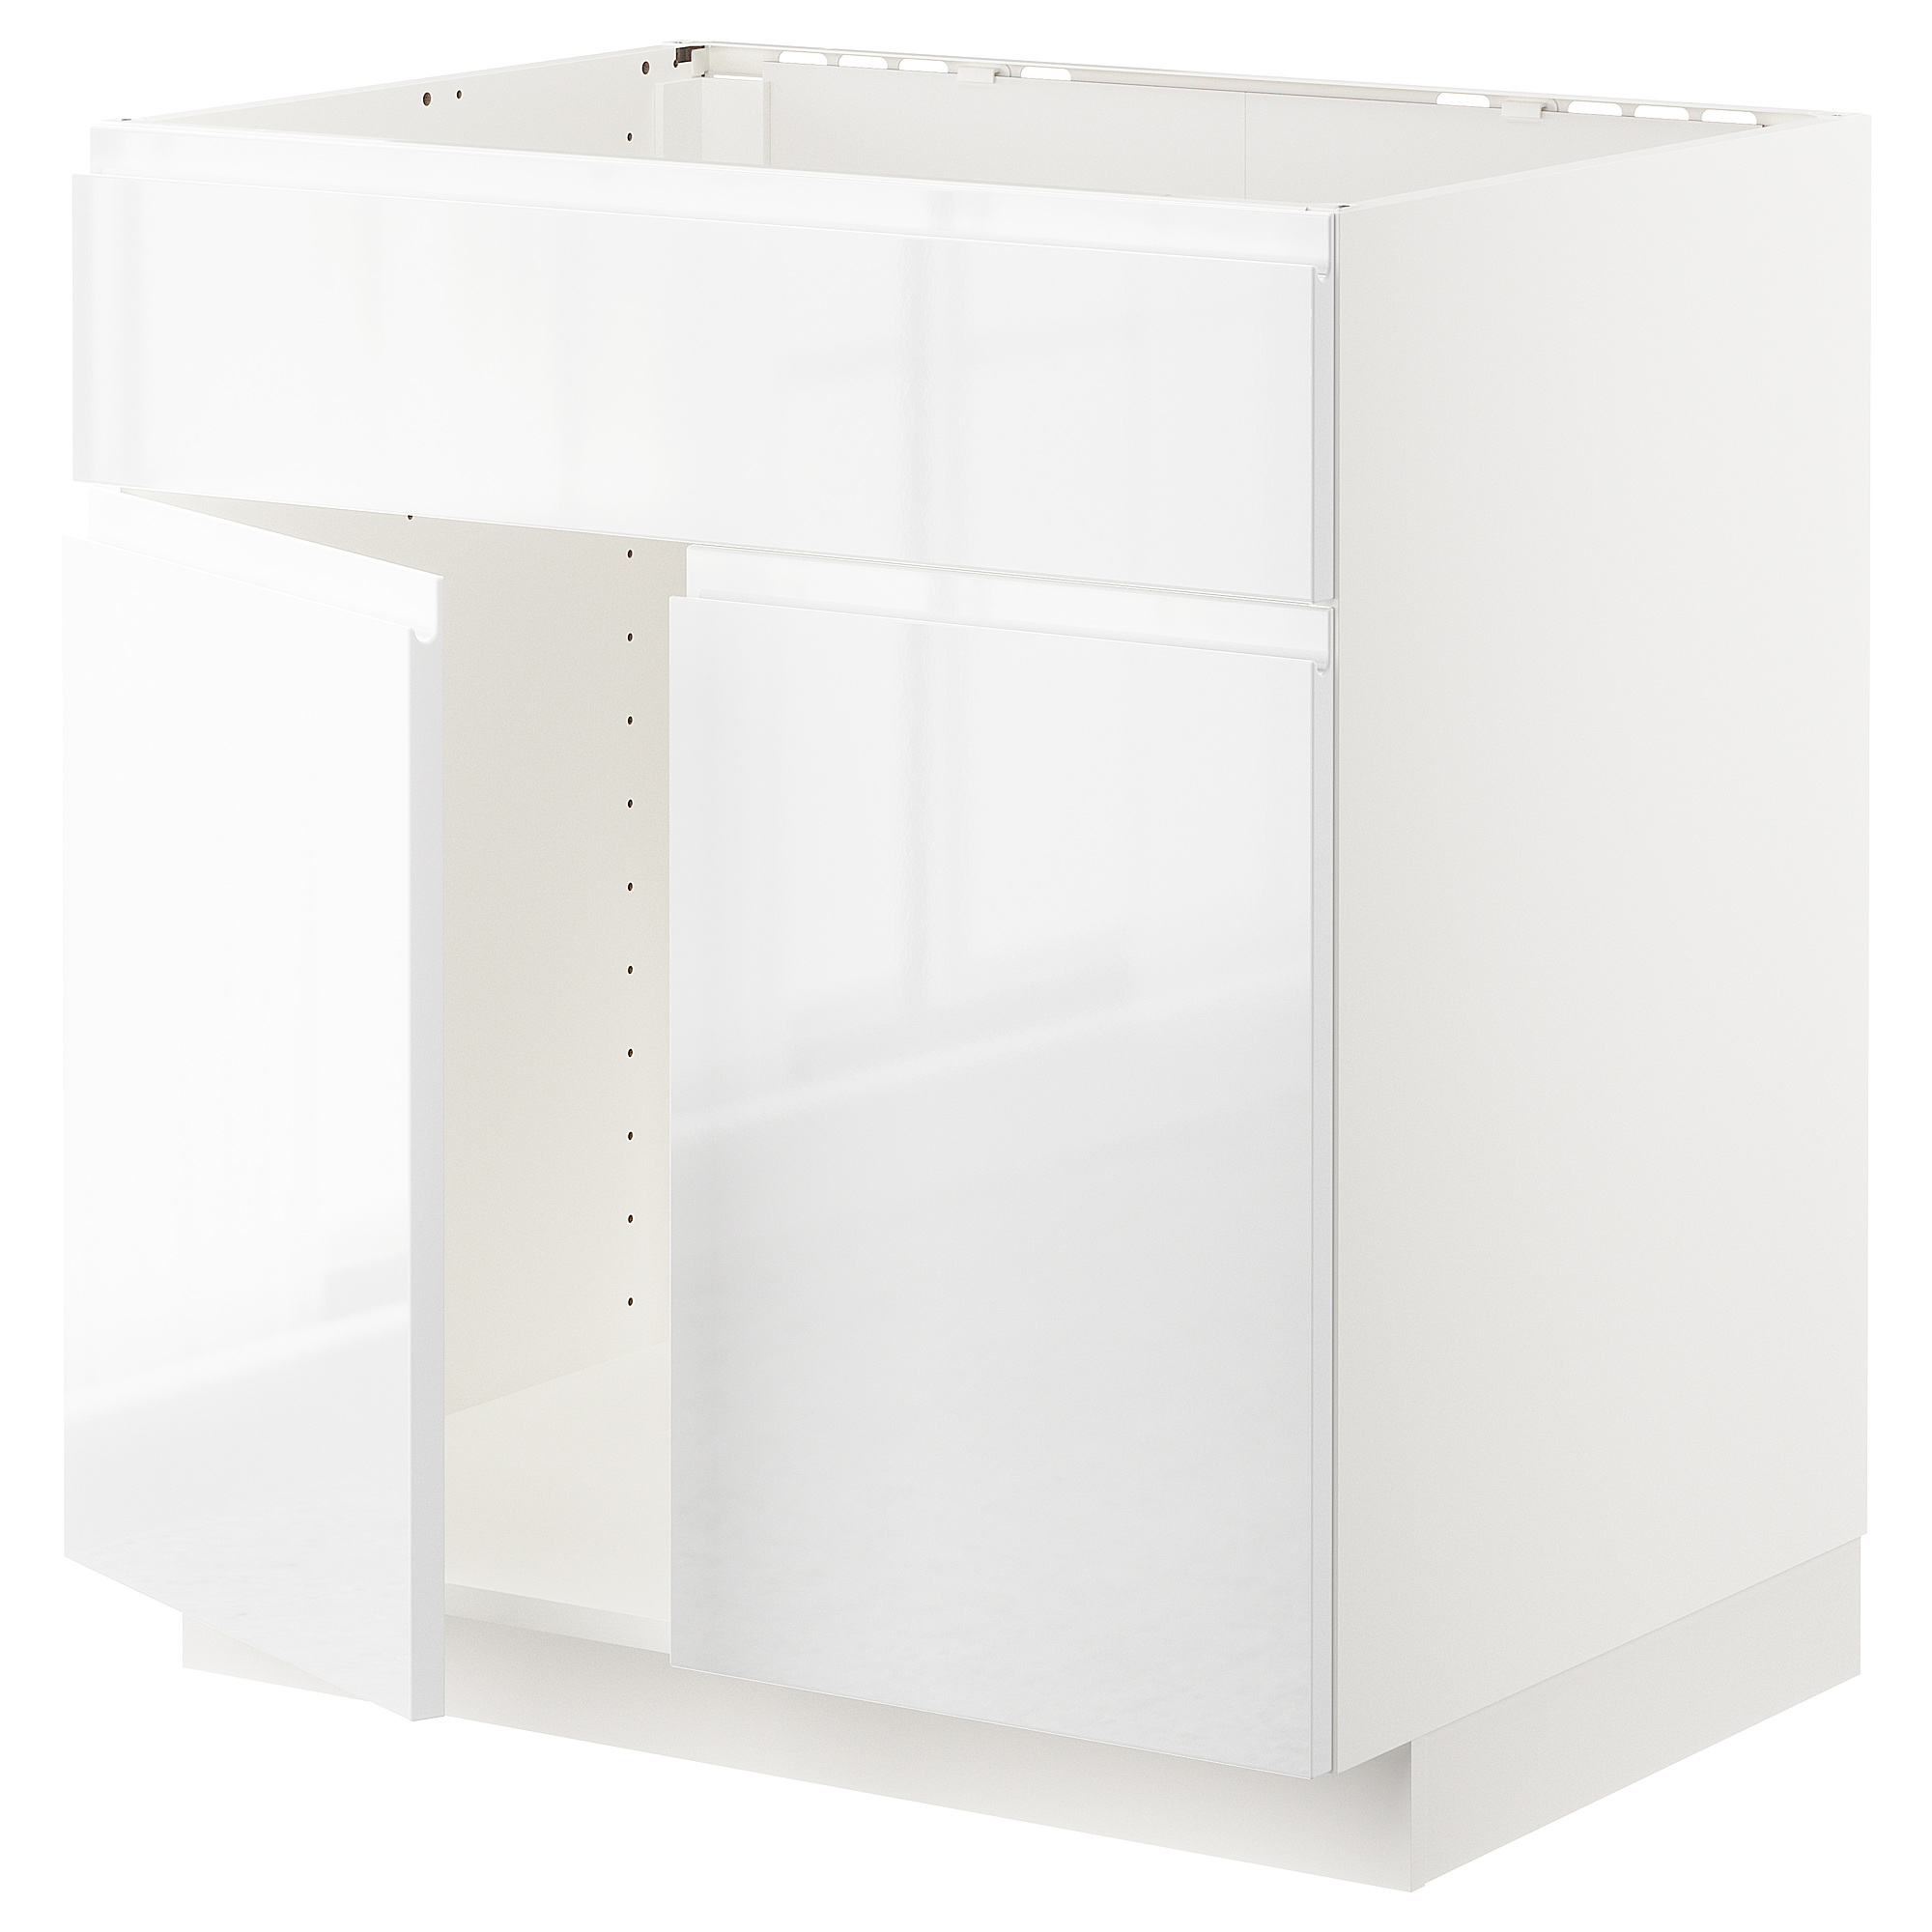 METOD base cabinet f sink w 2 doors/front